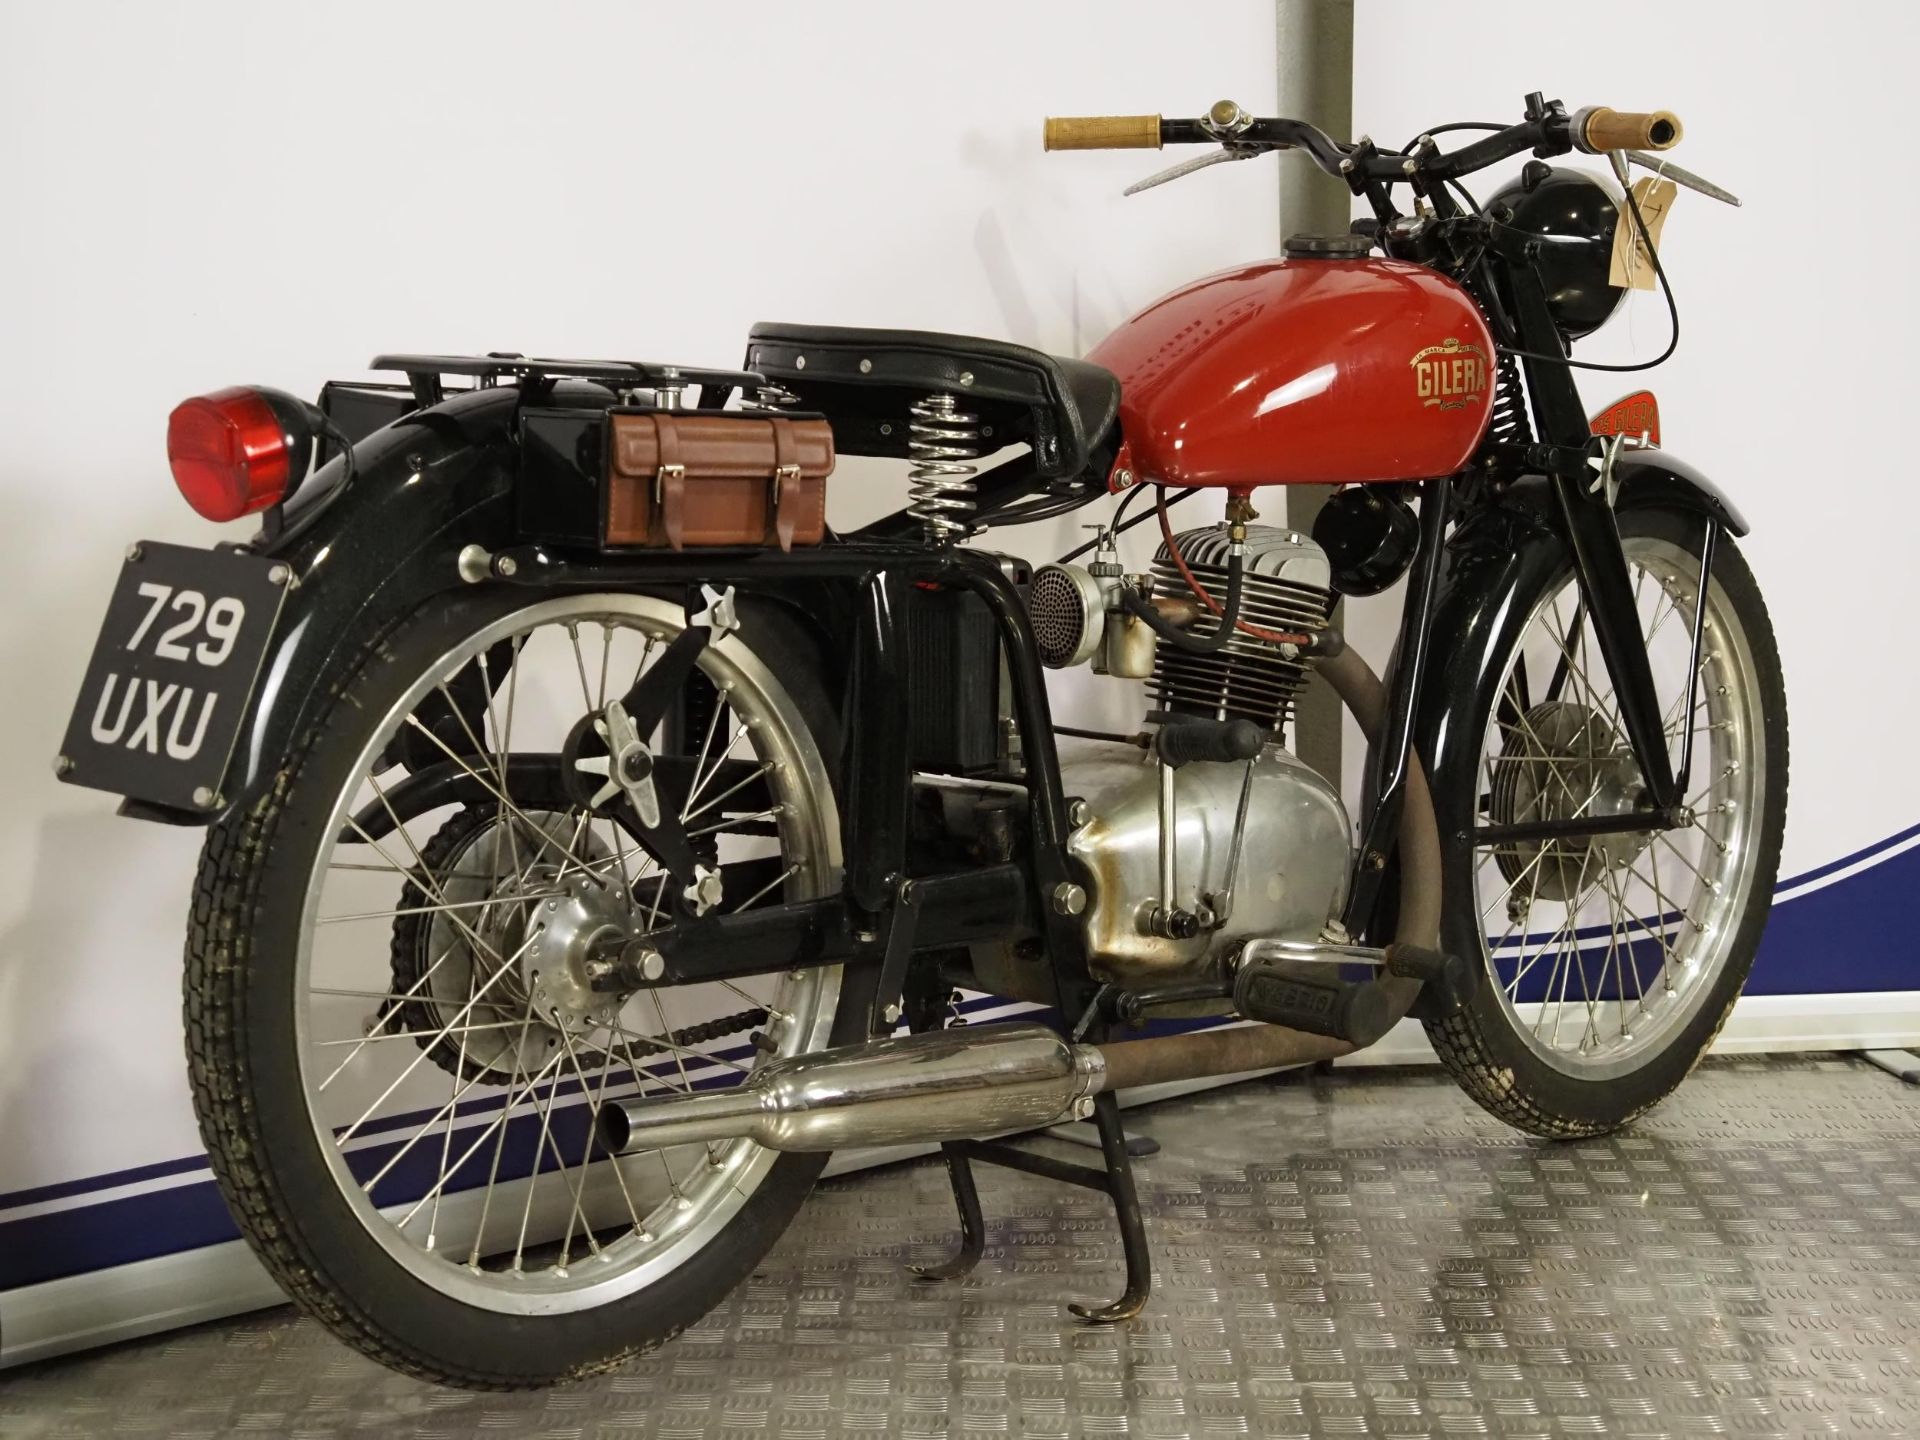 Gilera 125 Tourer motorcycle. 1949. 125cc Engine No. 16439 Good compression. Reg. 729 UXU. V5 - Image 4 of 6